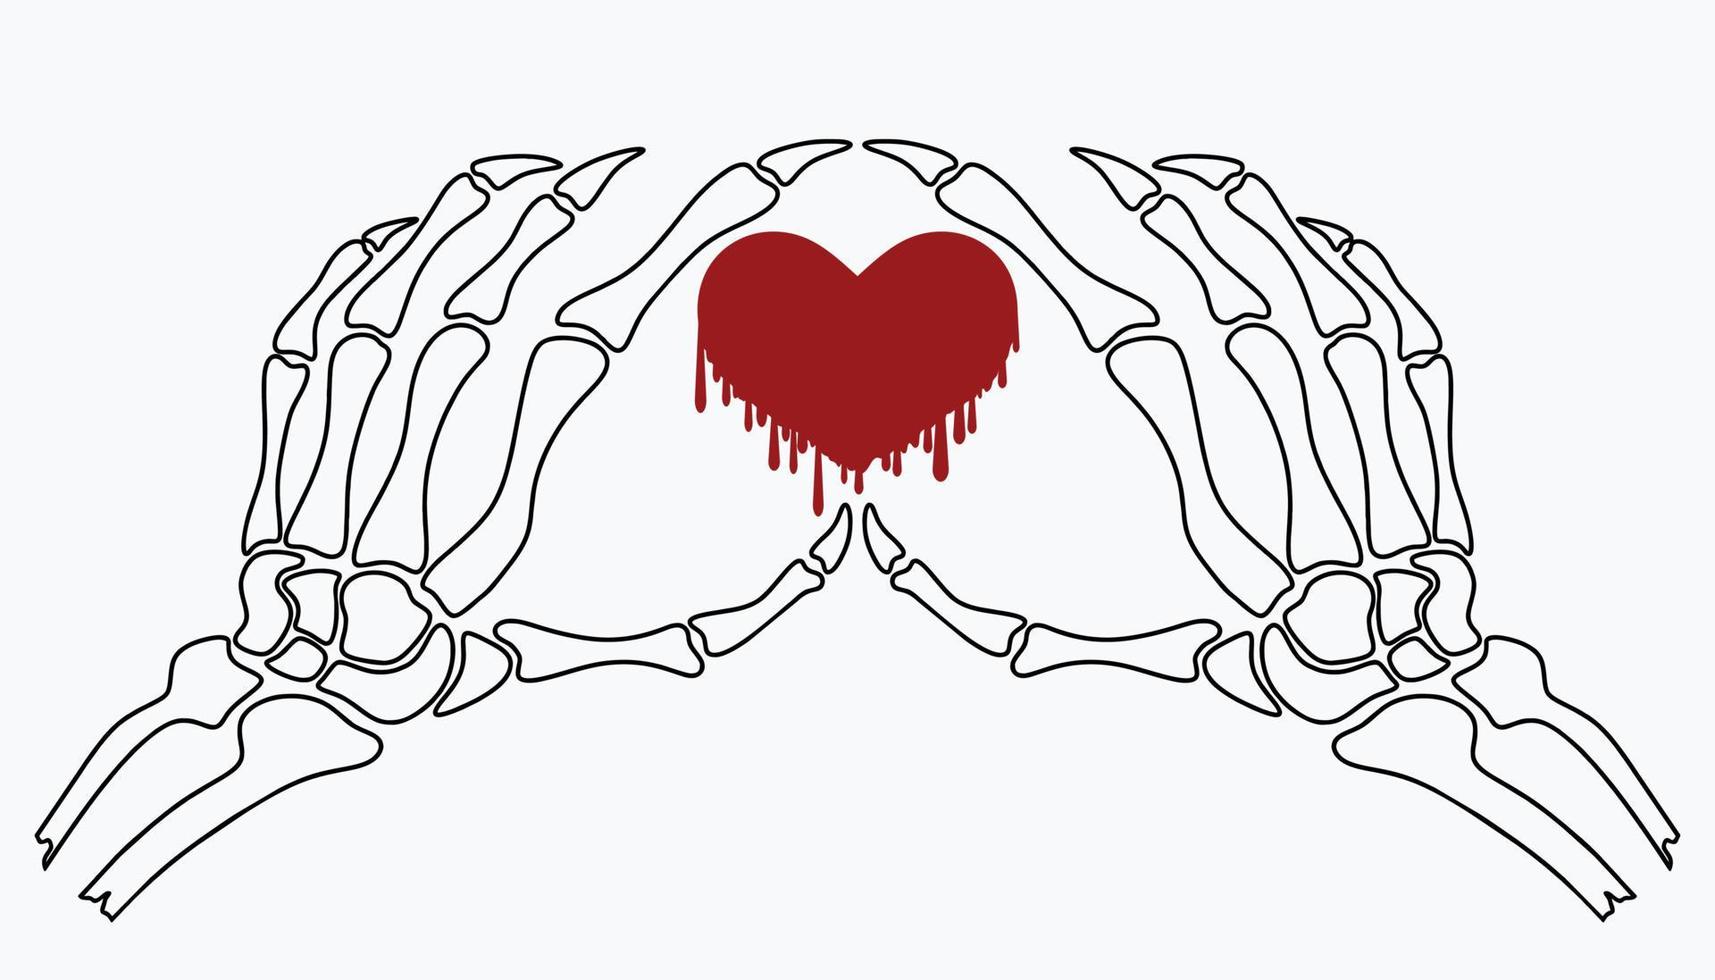 skelethand die hartvorm toont. vector